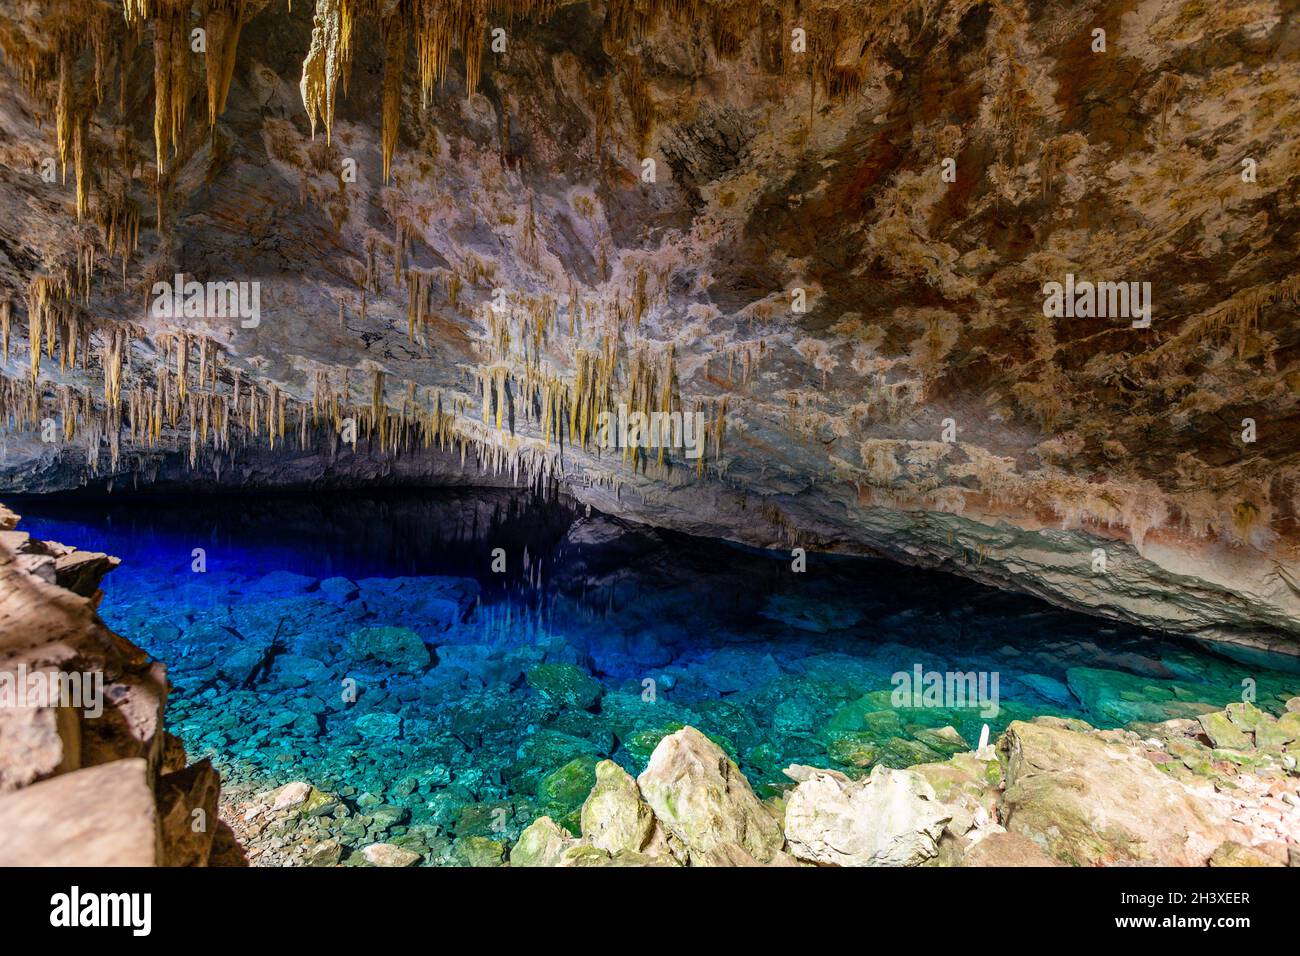 Abismo anhumas, cave with underground lake, Bonito national park, Mato Grosso Do Sul, Brazil Stock Photo